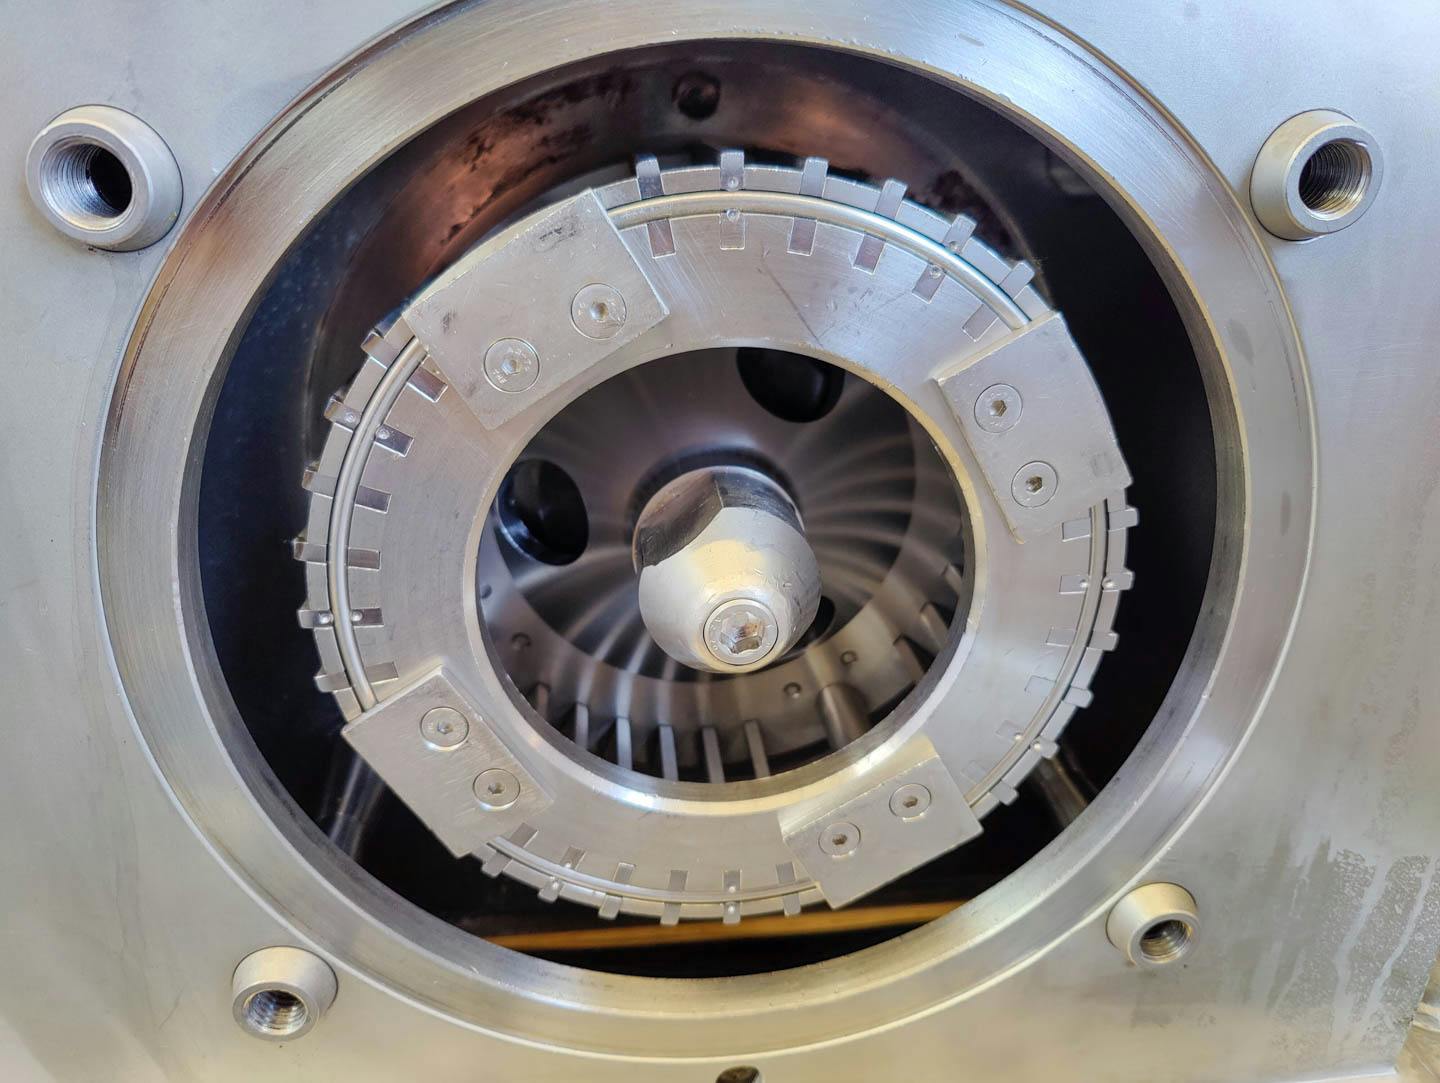 Bauermeister UMT 0.3 N Ex "blast rotor" - Molino de impacto para finos - image 8